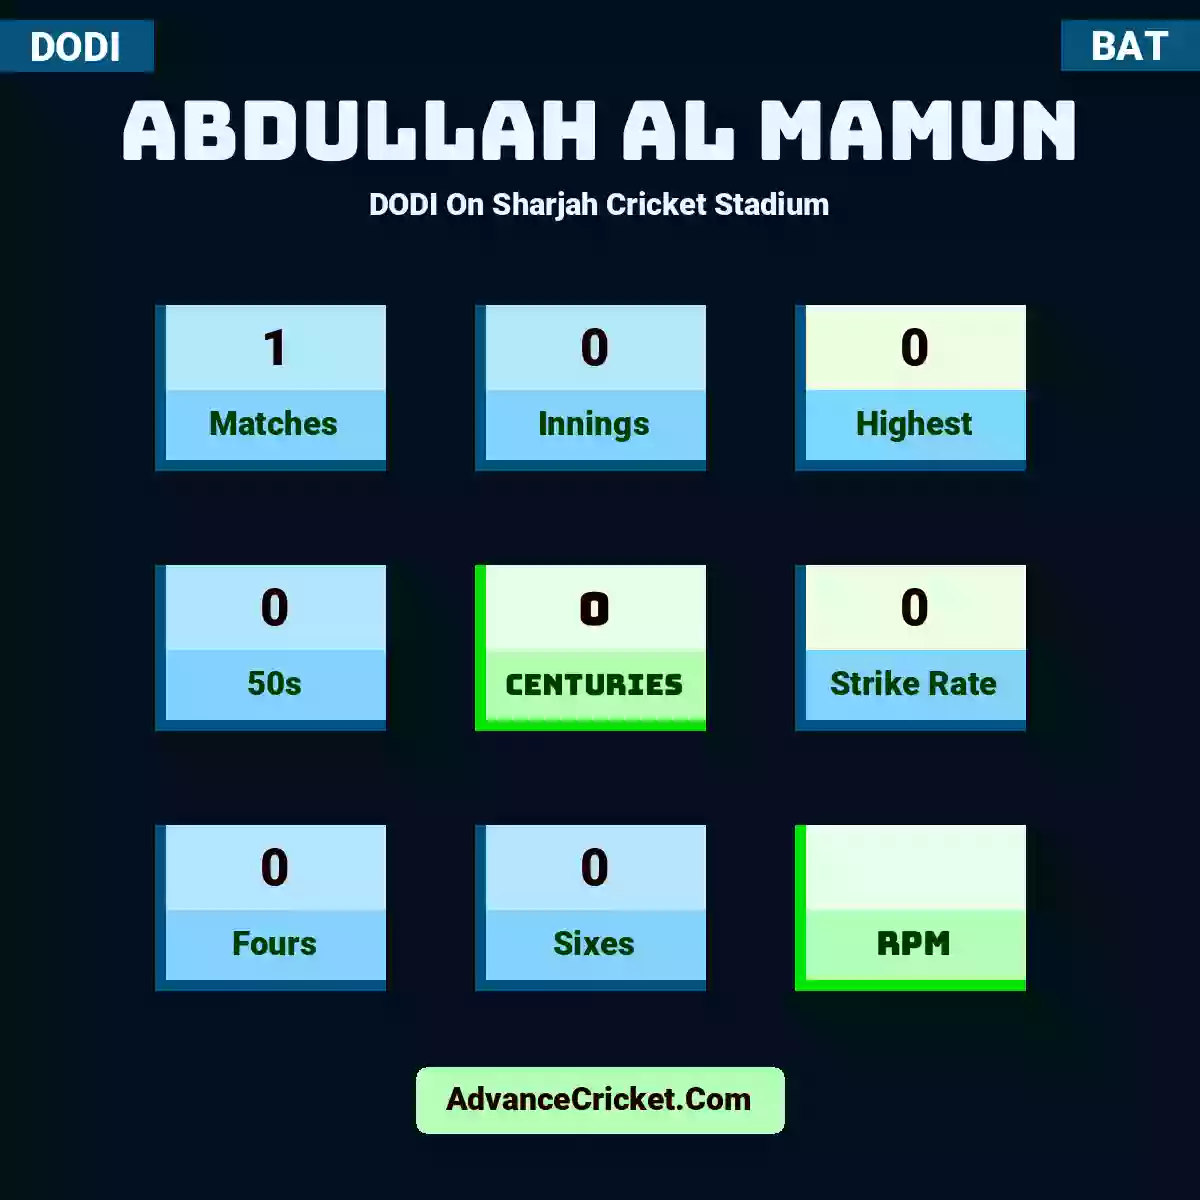 Abdullah Al Mamun DODI  On Sharjah Cricket Stadium, Abdullah Al Mamun played 1 matches, scored 0 runs as highest, 0 half-centuries, and 0 centuries, with a strike rate of 0. A.Mamun hit 0 fours and 0 sixes.